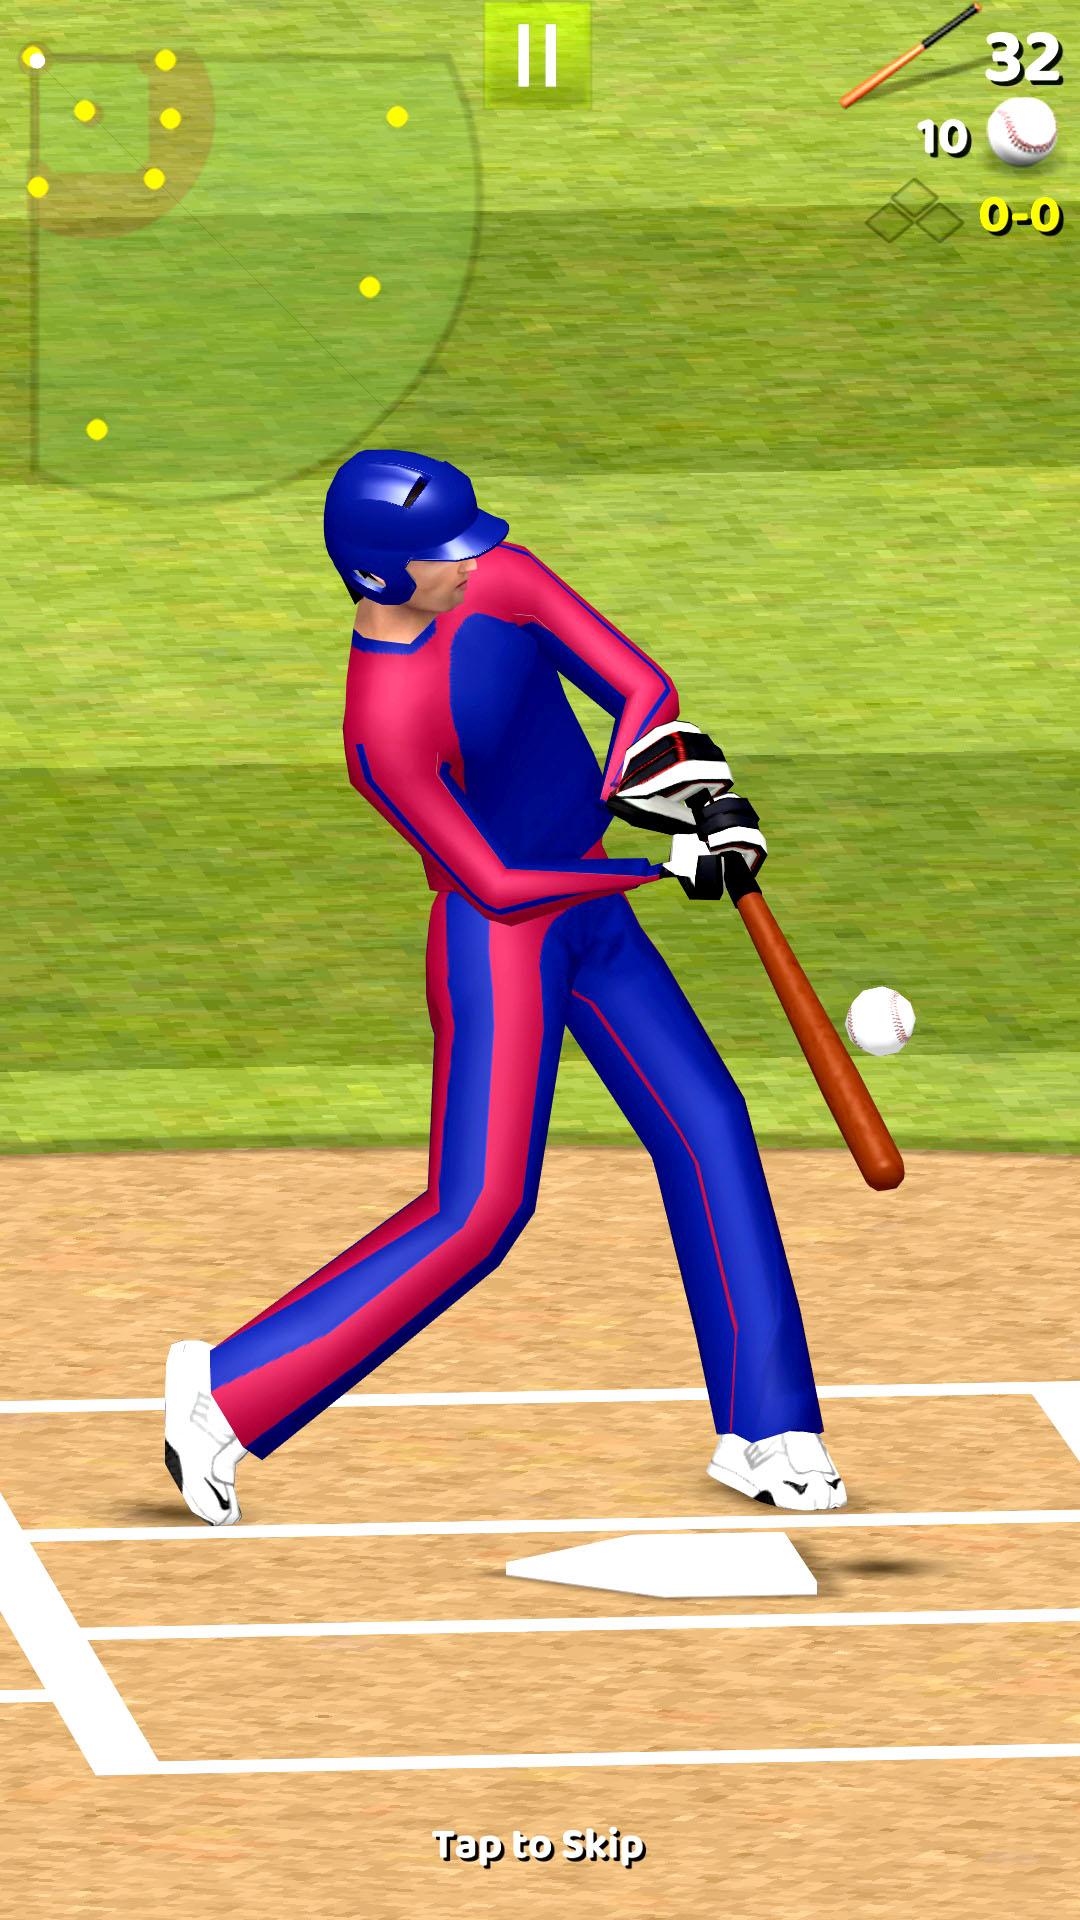 Smashing Baseball a baseball game like none other 1.0.6 Screenshot 3